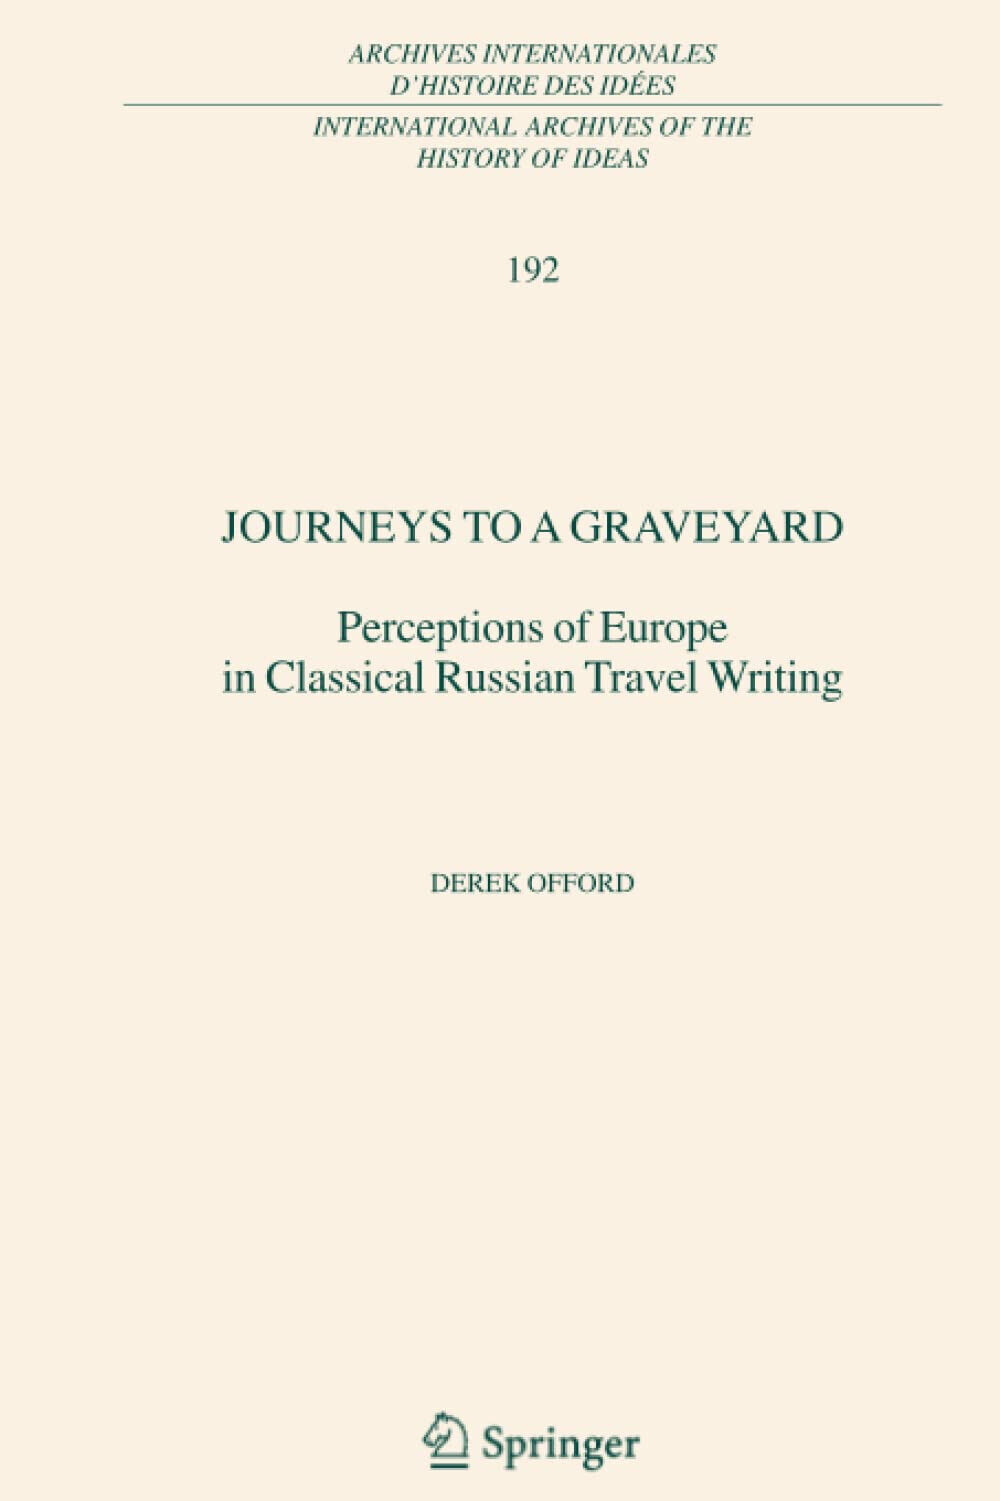 Journeys to a Graveyard - Derek Offord - Springer, 2010